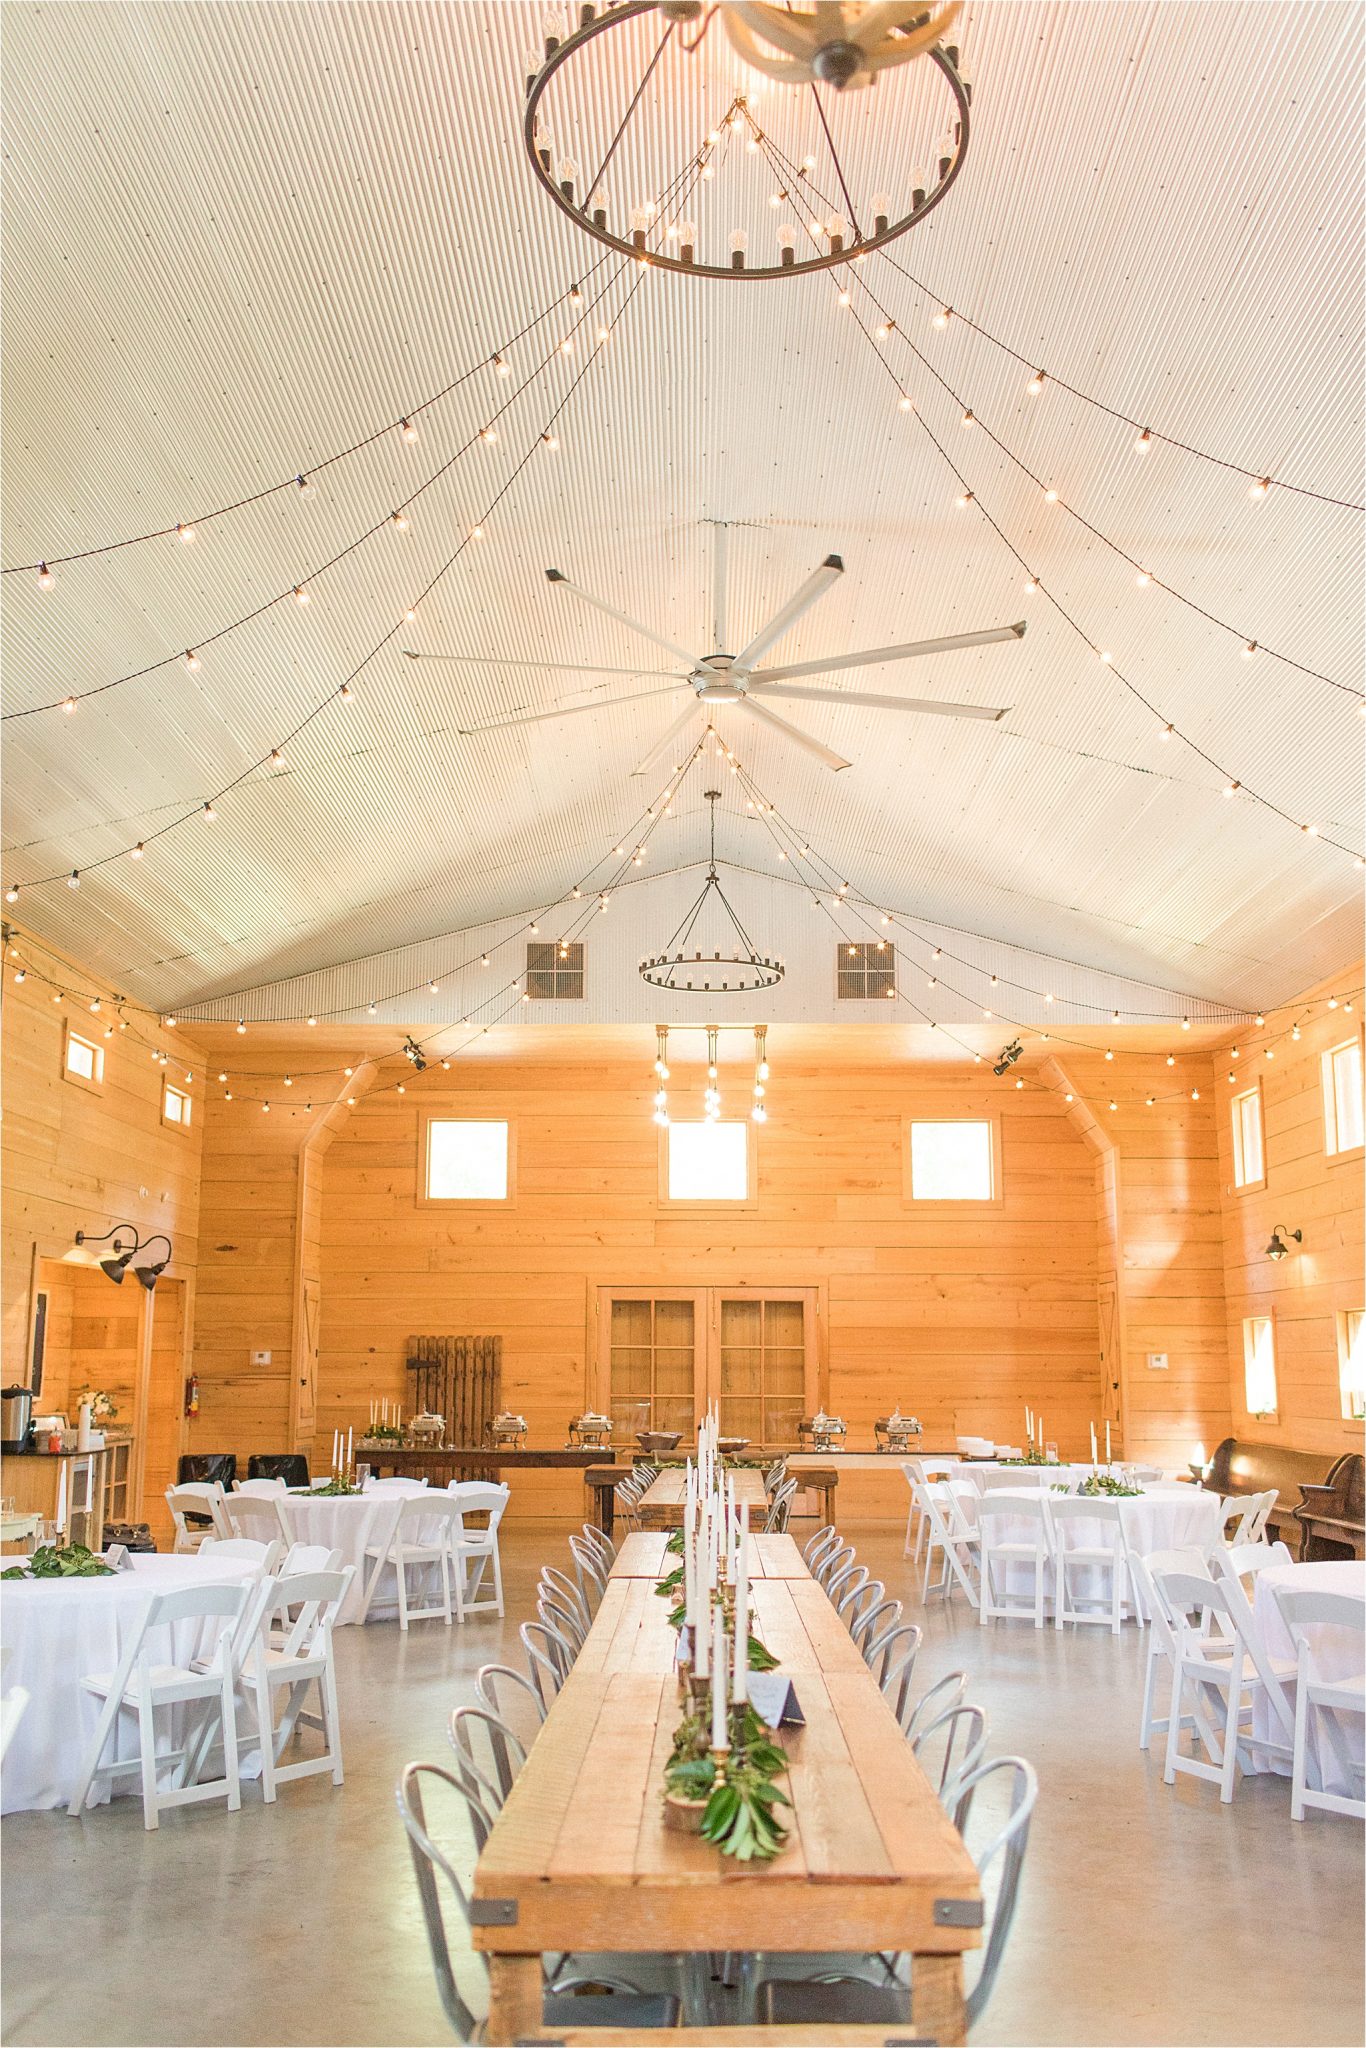 wedding-reception-alabama-venue-barn-farm-tables-metal-chairs-candle-centerpieces-shiplap